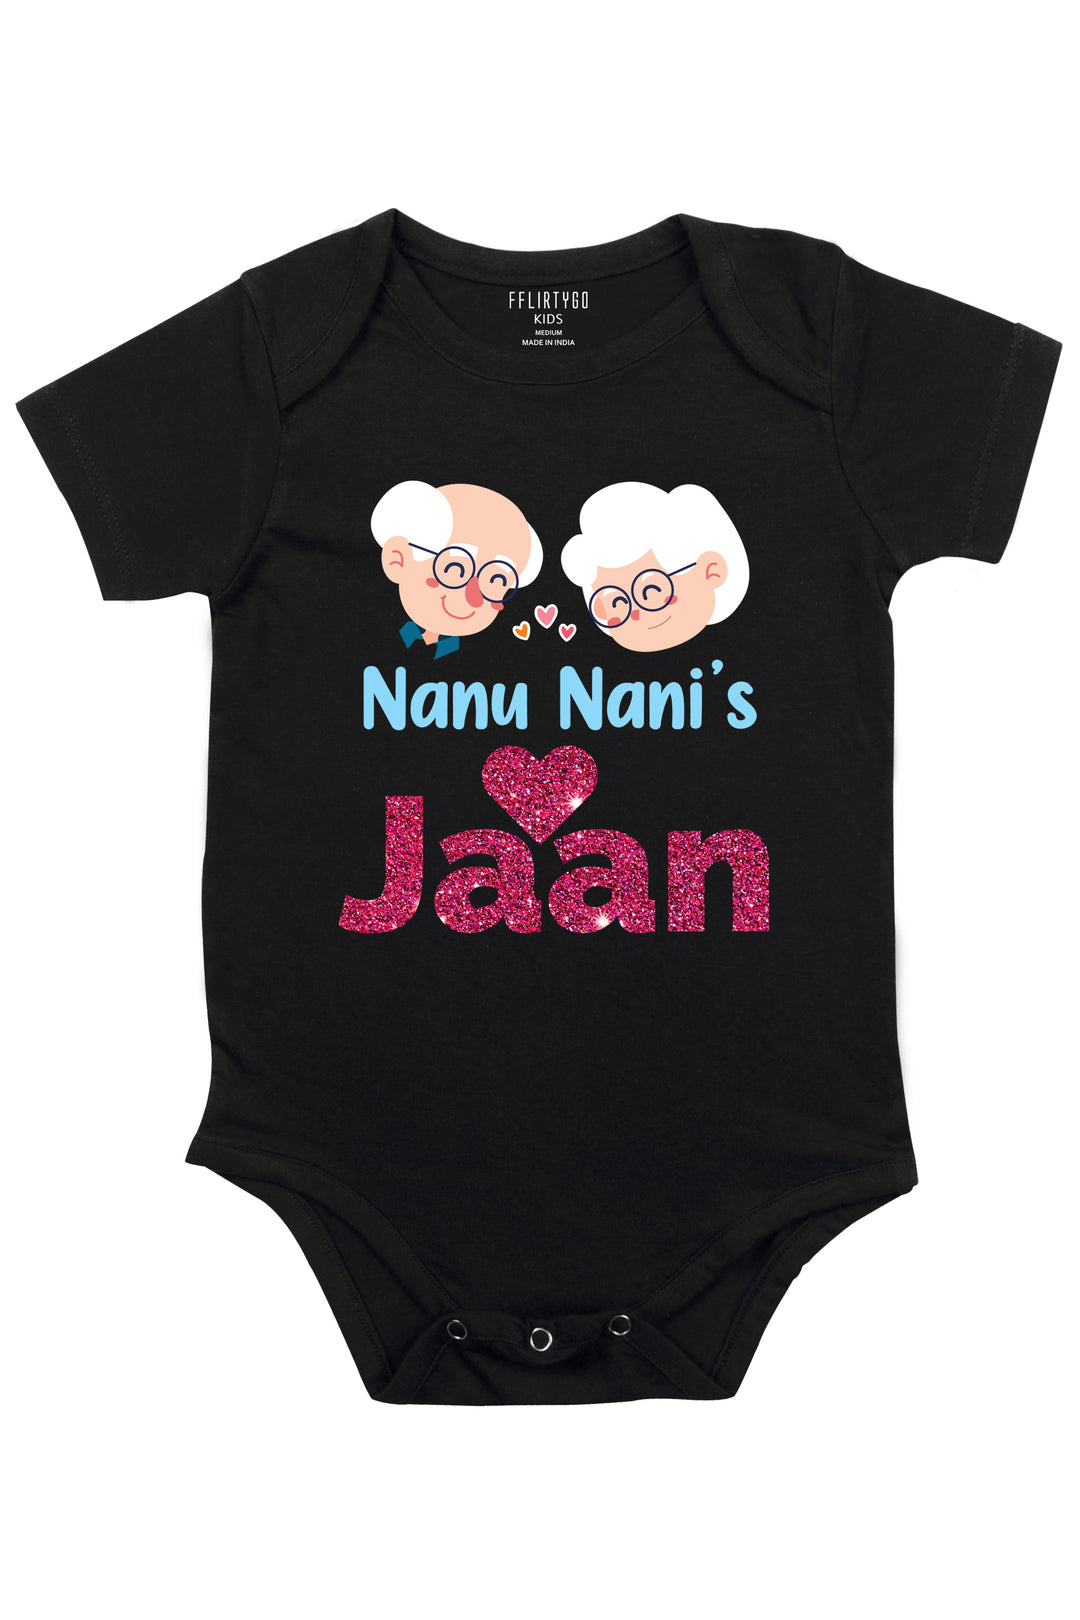 Nanu and Nani's Jaan Baby Romper | Onesies